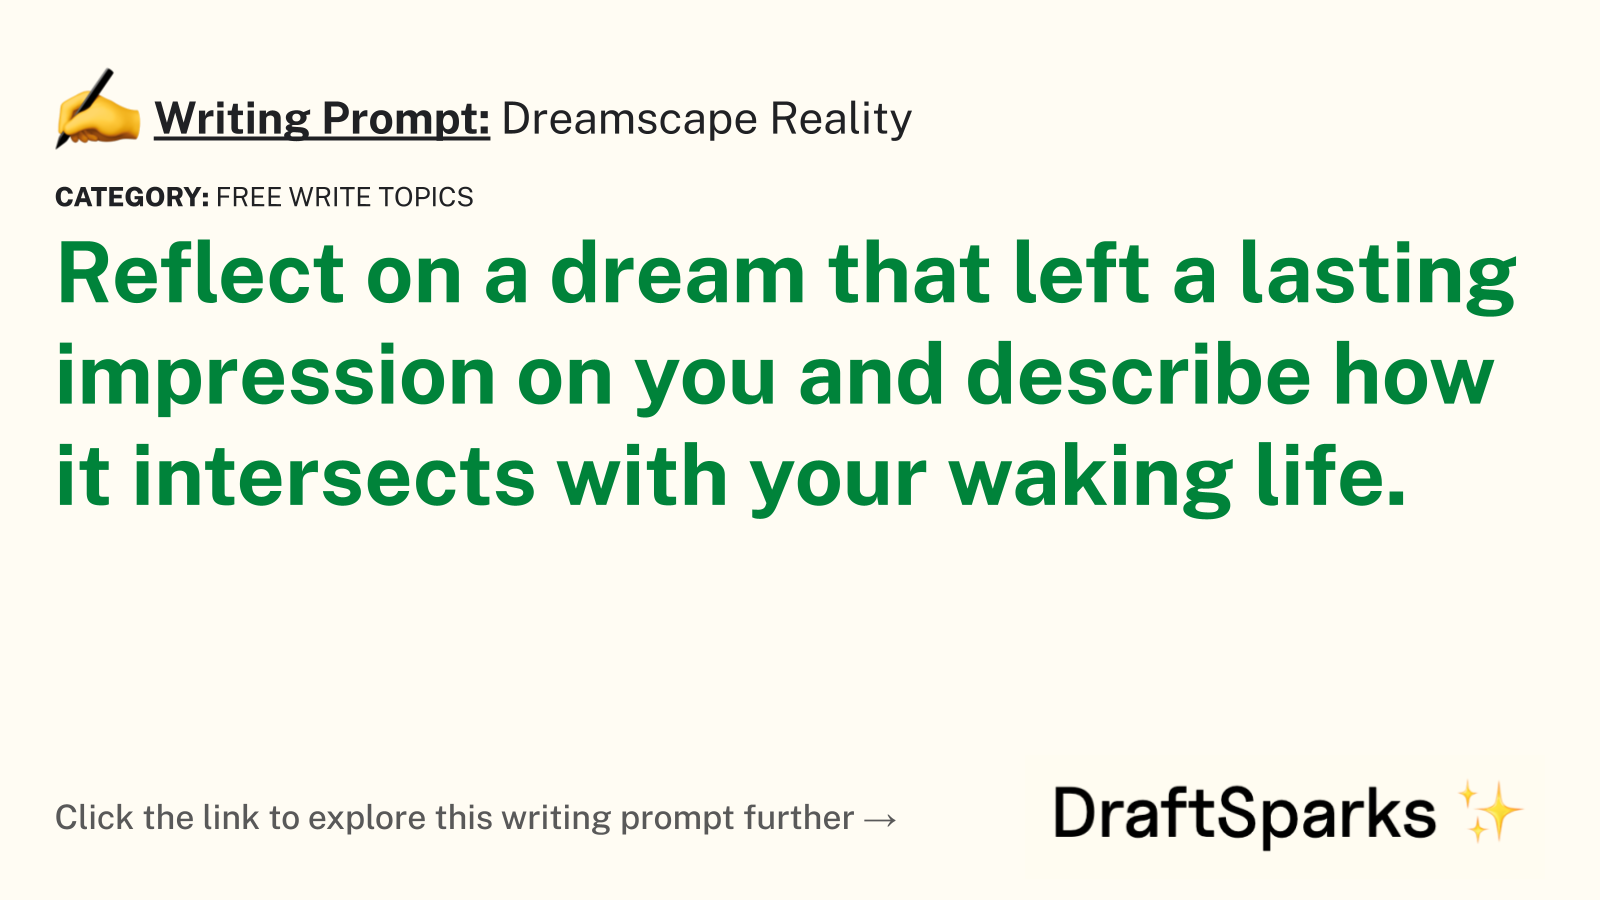 Dreamscape Reality